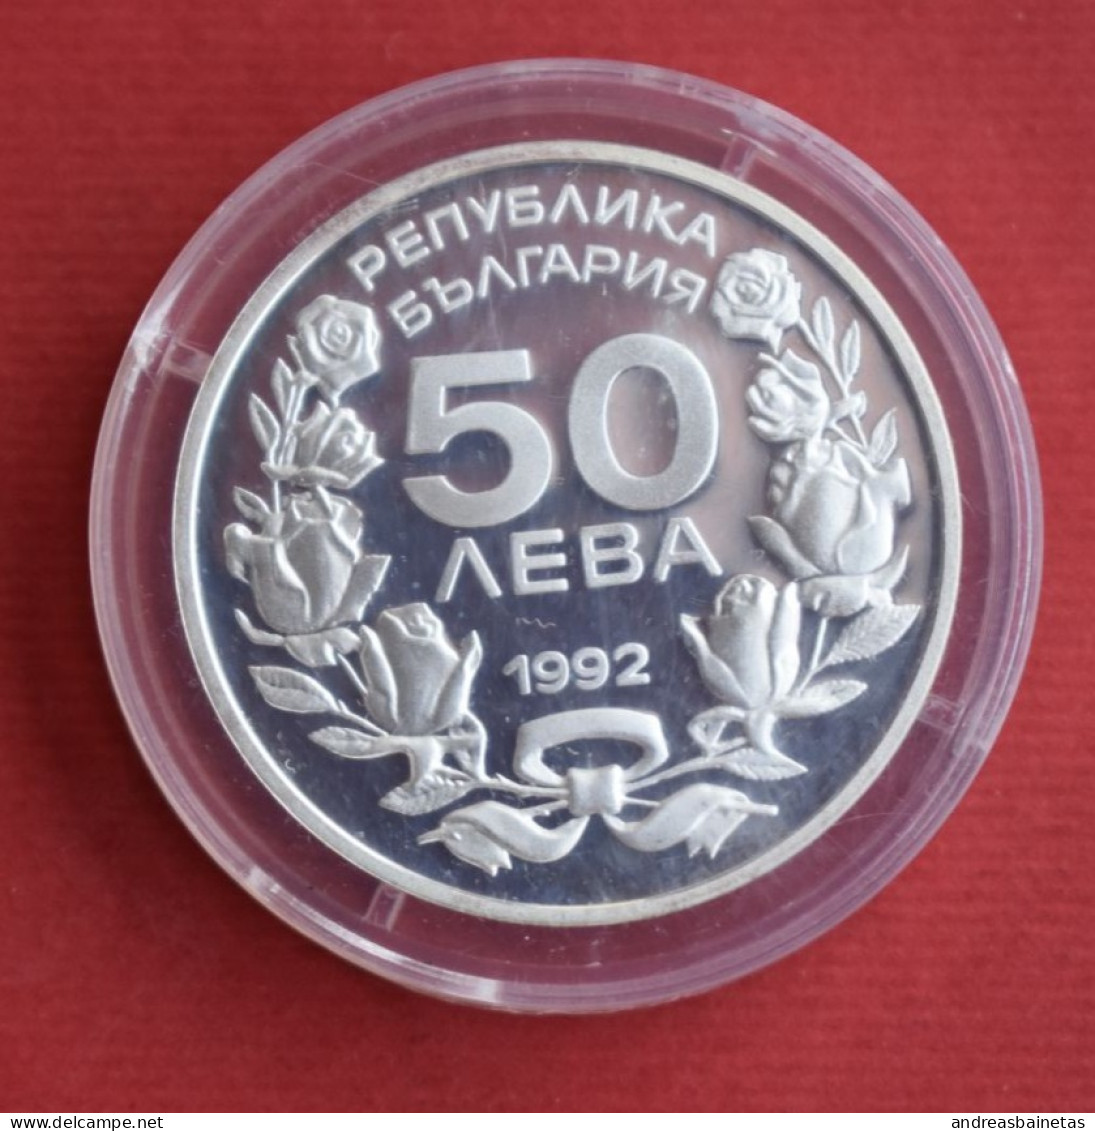 Coins Bulgaria  KM# 198 50 Leva XVII Winter Olympic Games - Downhill Skiing 1992 - Bulgaria